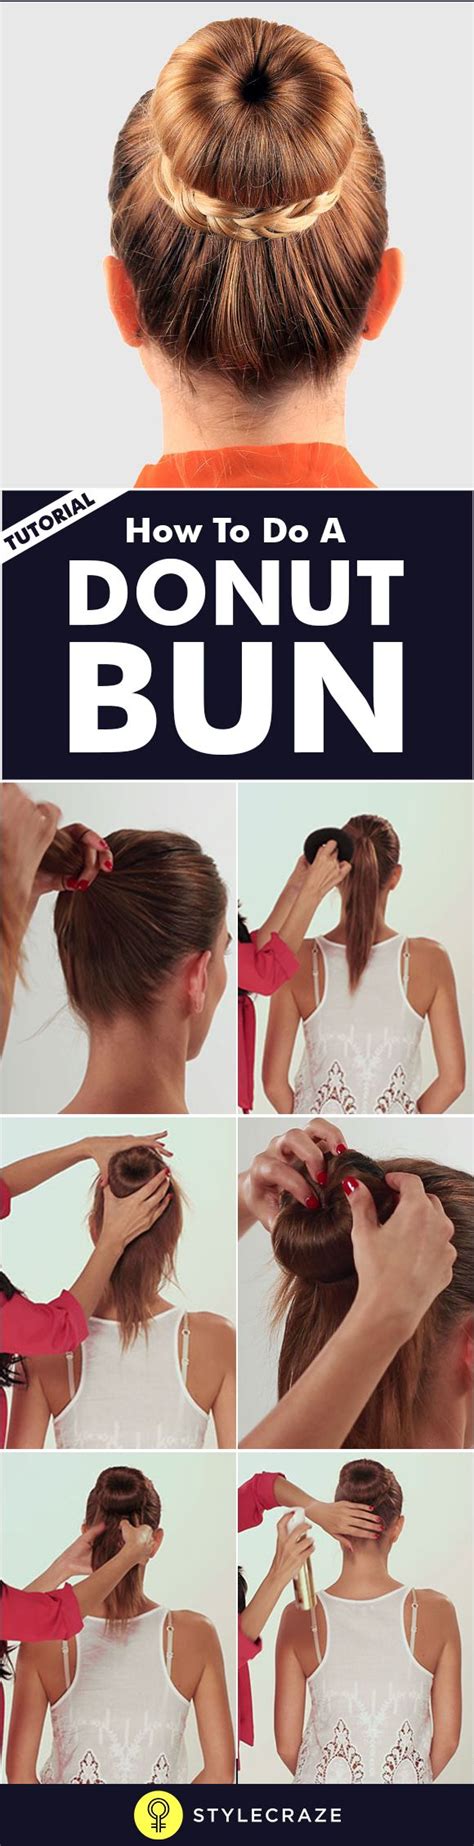 How To Do A Donut Bun Step By Step Procedure Donut Bun Hairstyles